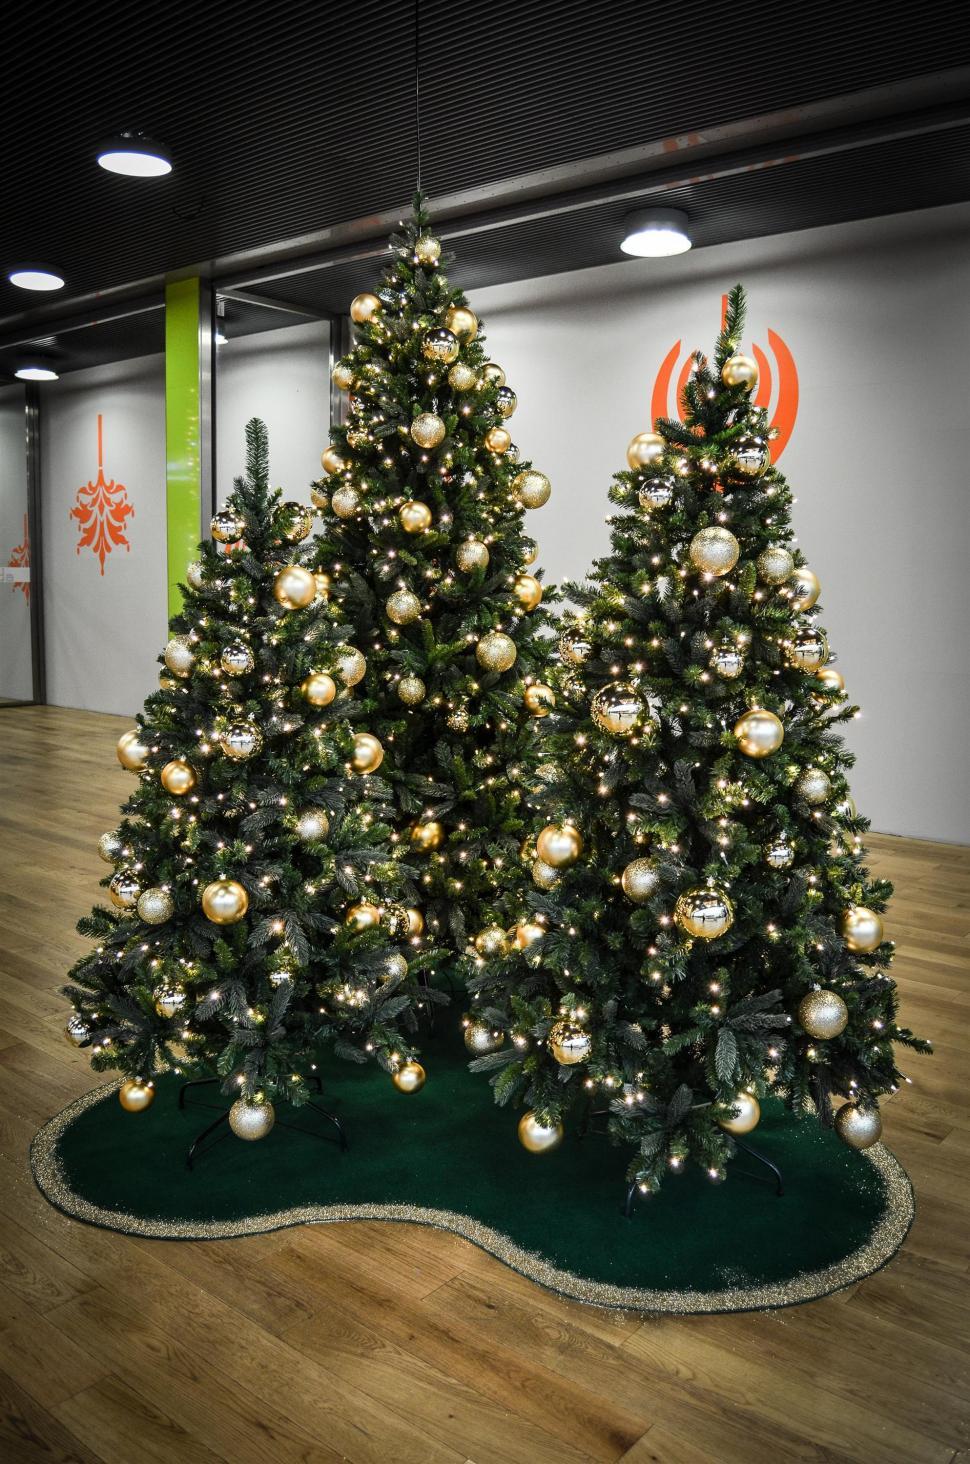 Free Image of Two Christmas Trees on Hardwood Floor 